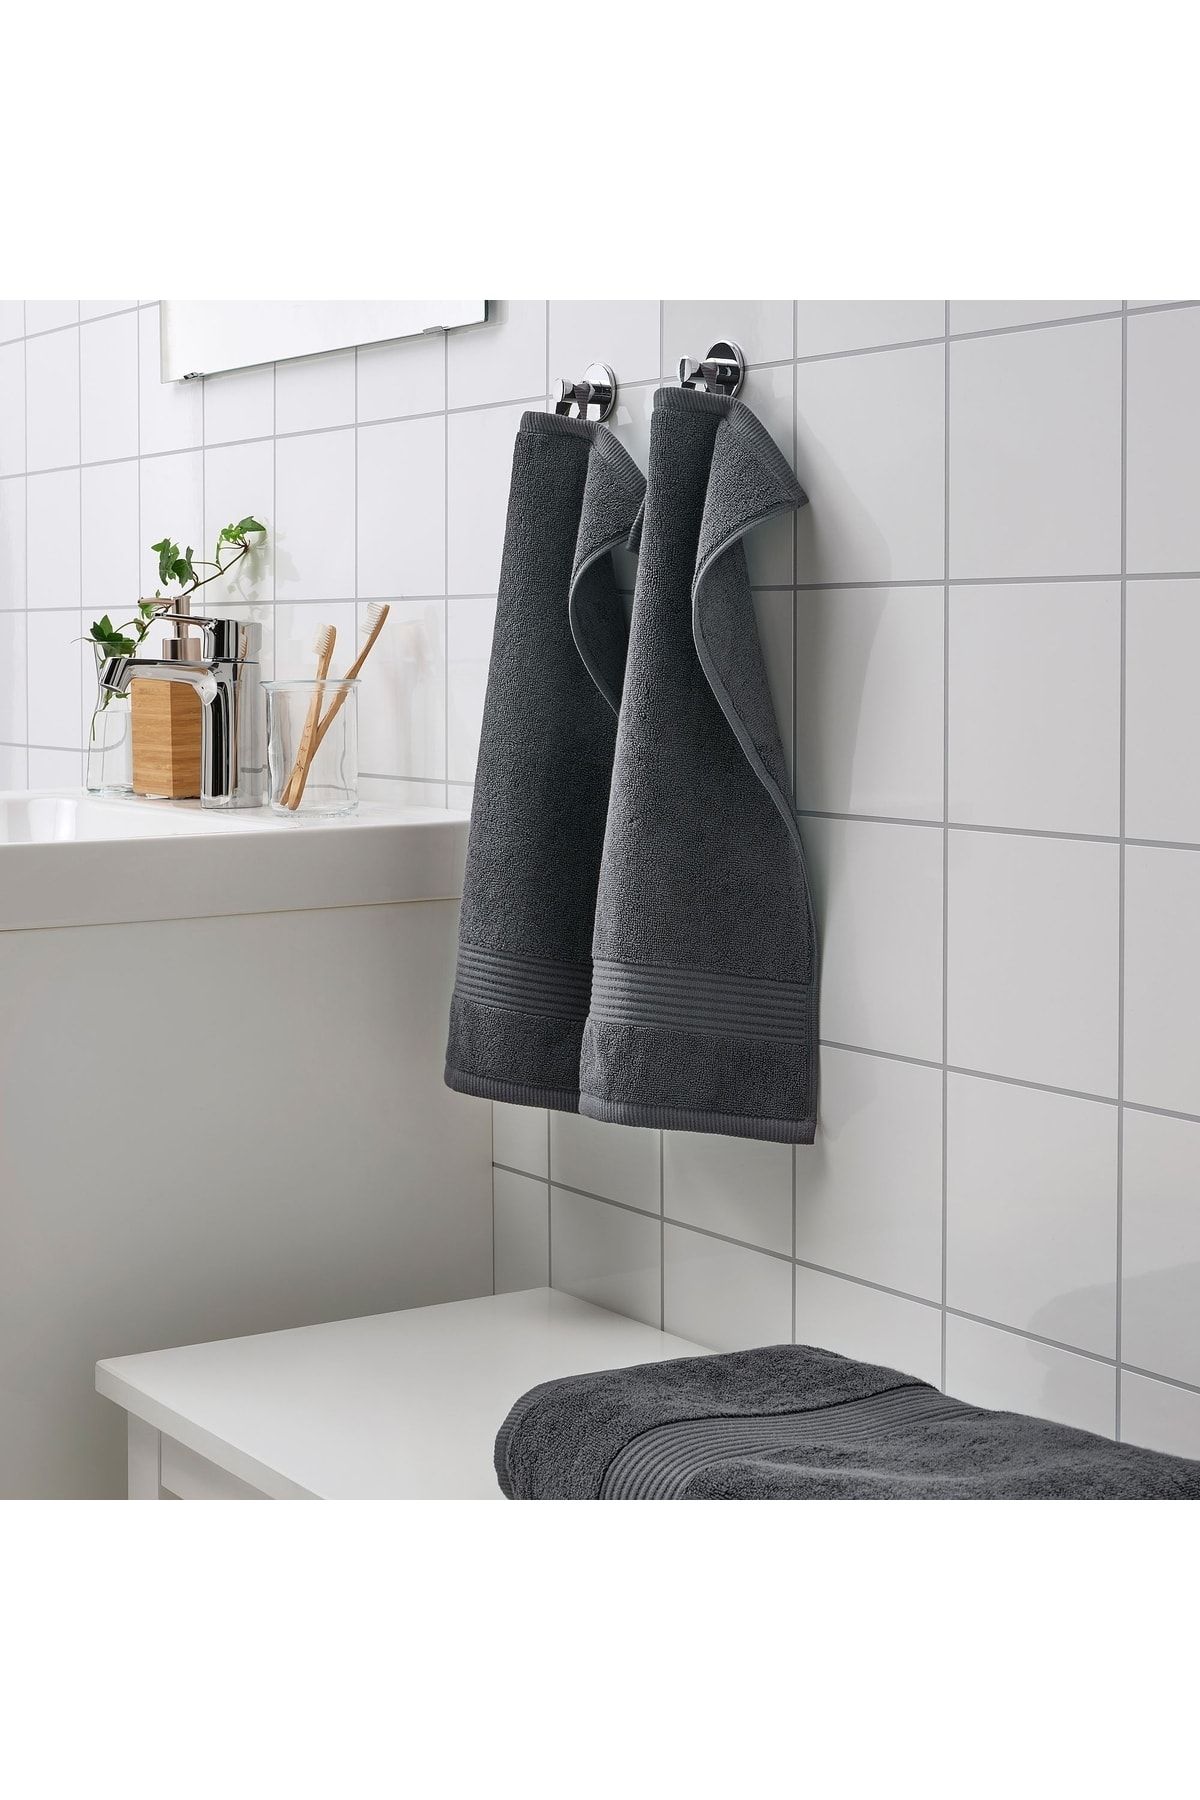 IKEA 2 Adet Küçük Banyo Havlusu 30x50 Cm Askılı El Yüz Havlusu Koyu Gri